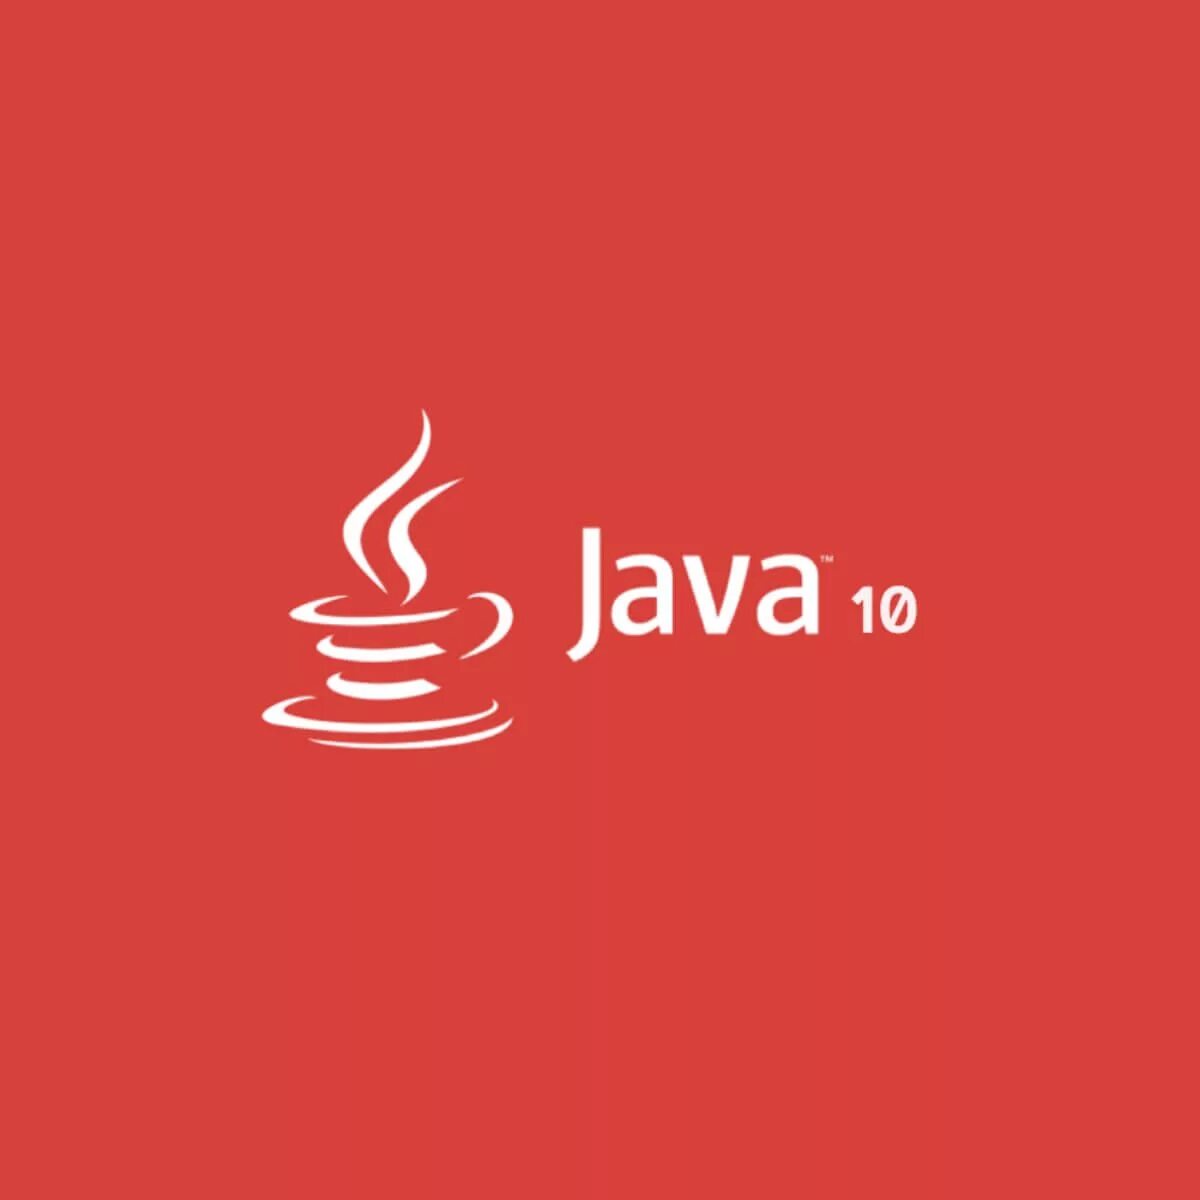 Java. Java картинки. Java эмблема. Логотип языка java. Картинка java